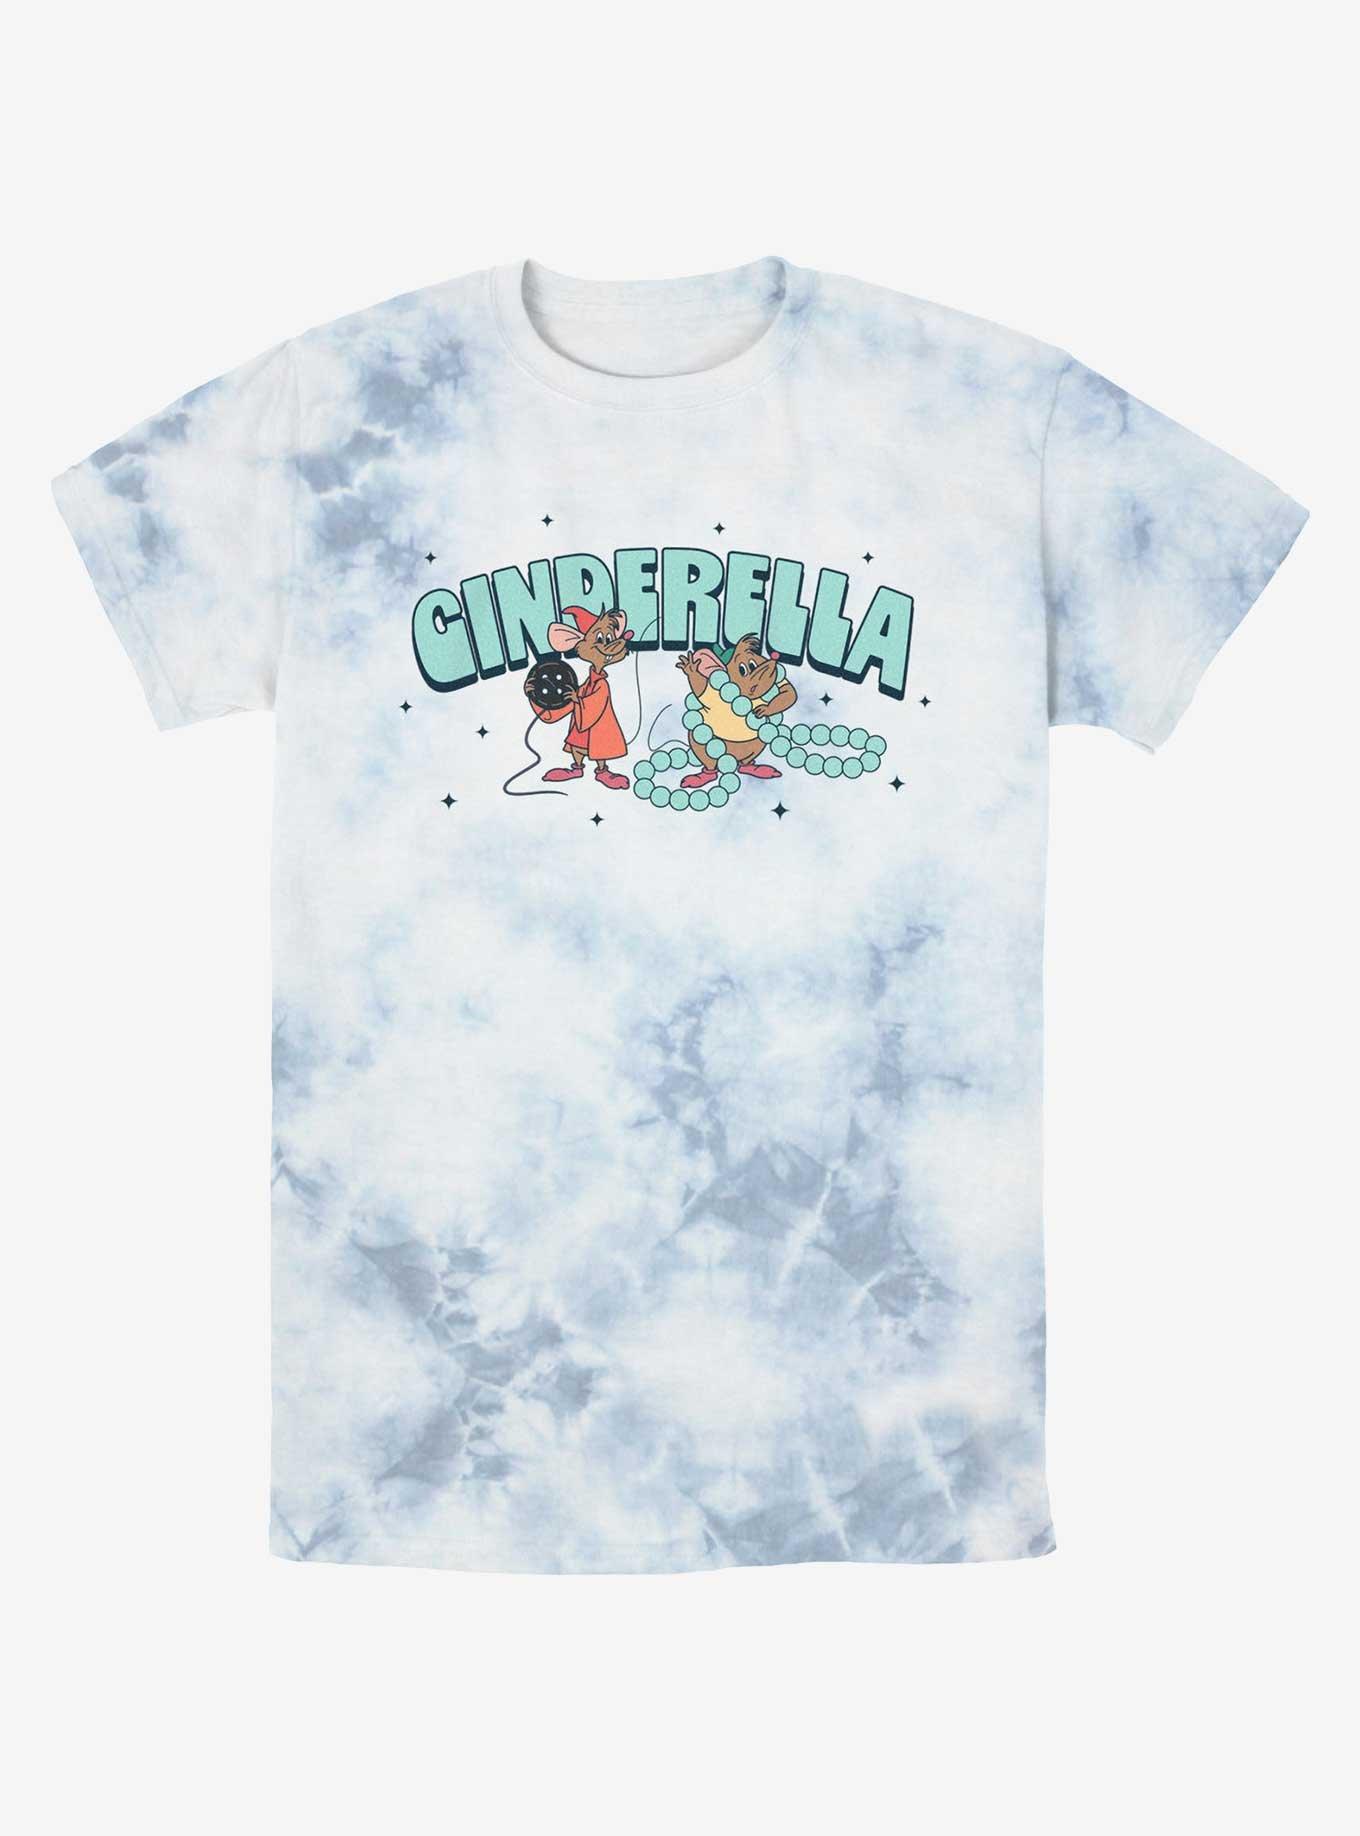 Disney Cinderella Jaq And Gus Tie-Dye T-Shirt, WHITEBLUE, hi-res